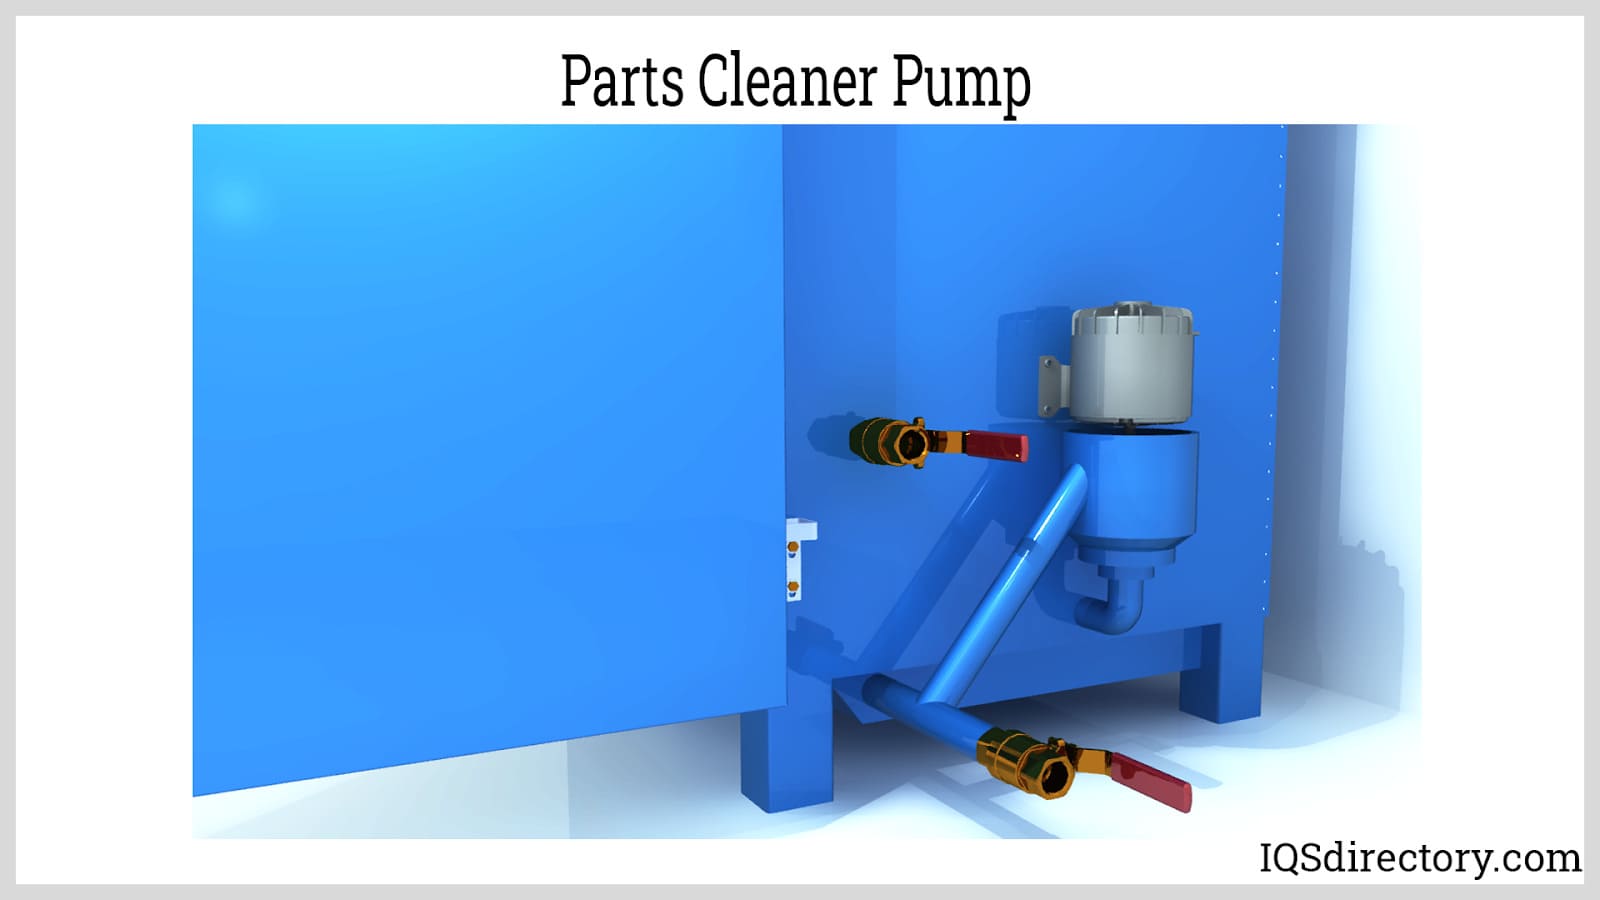 Parts Cleaner Pump